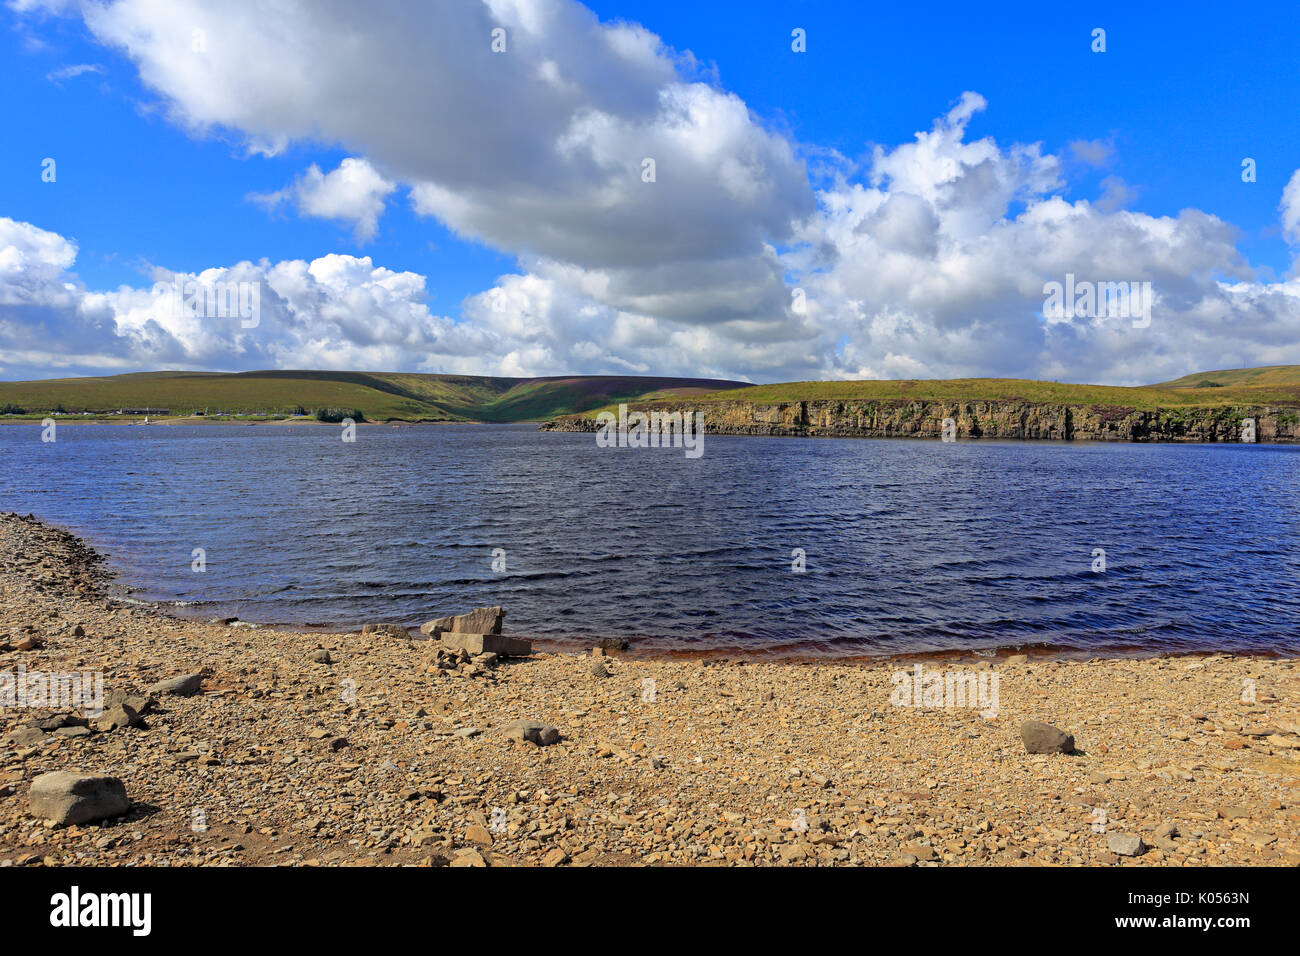 Winscar Reservoir, Peak District Mitgliedstats Park, Barnsley, South Yorkshire, England, UK. Stockfoto